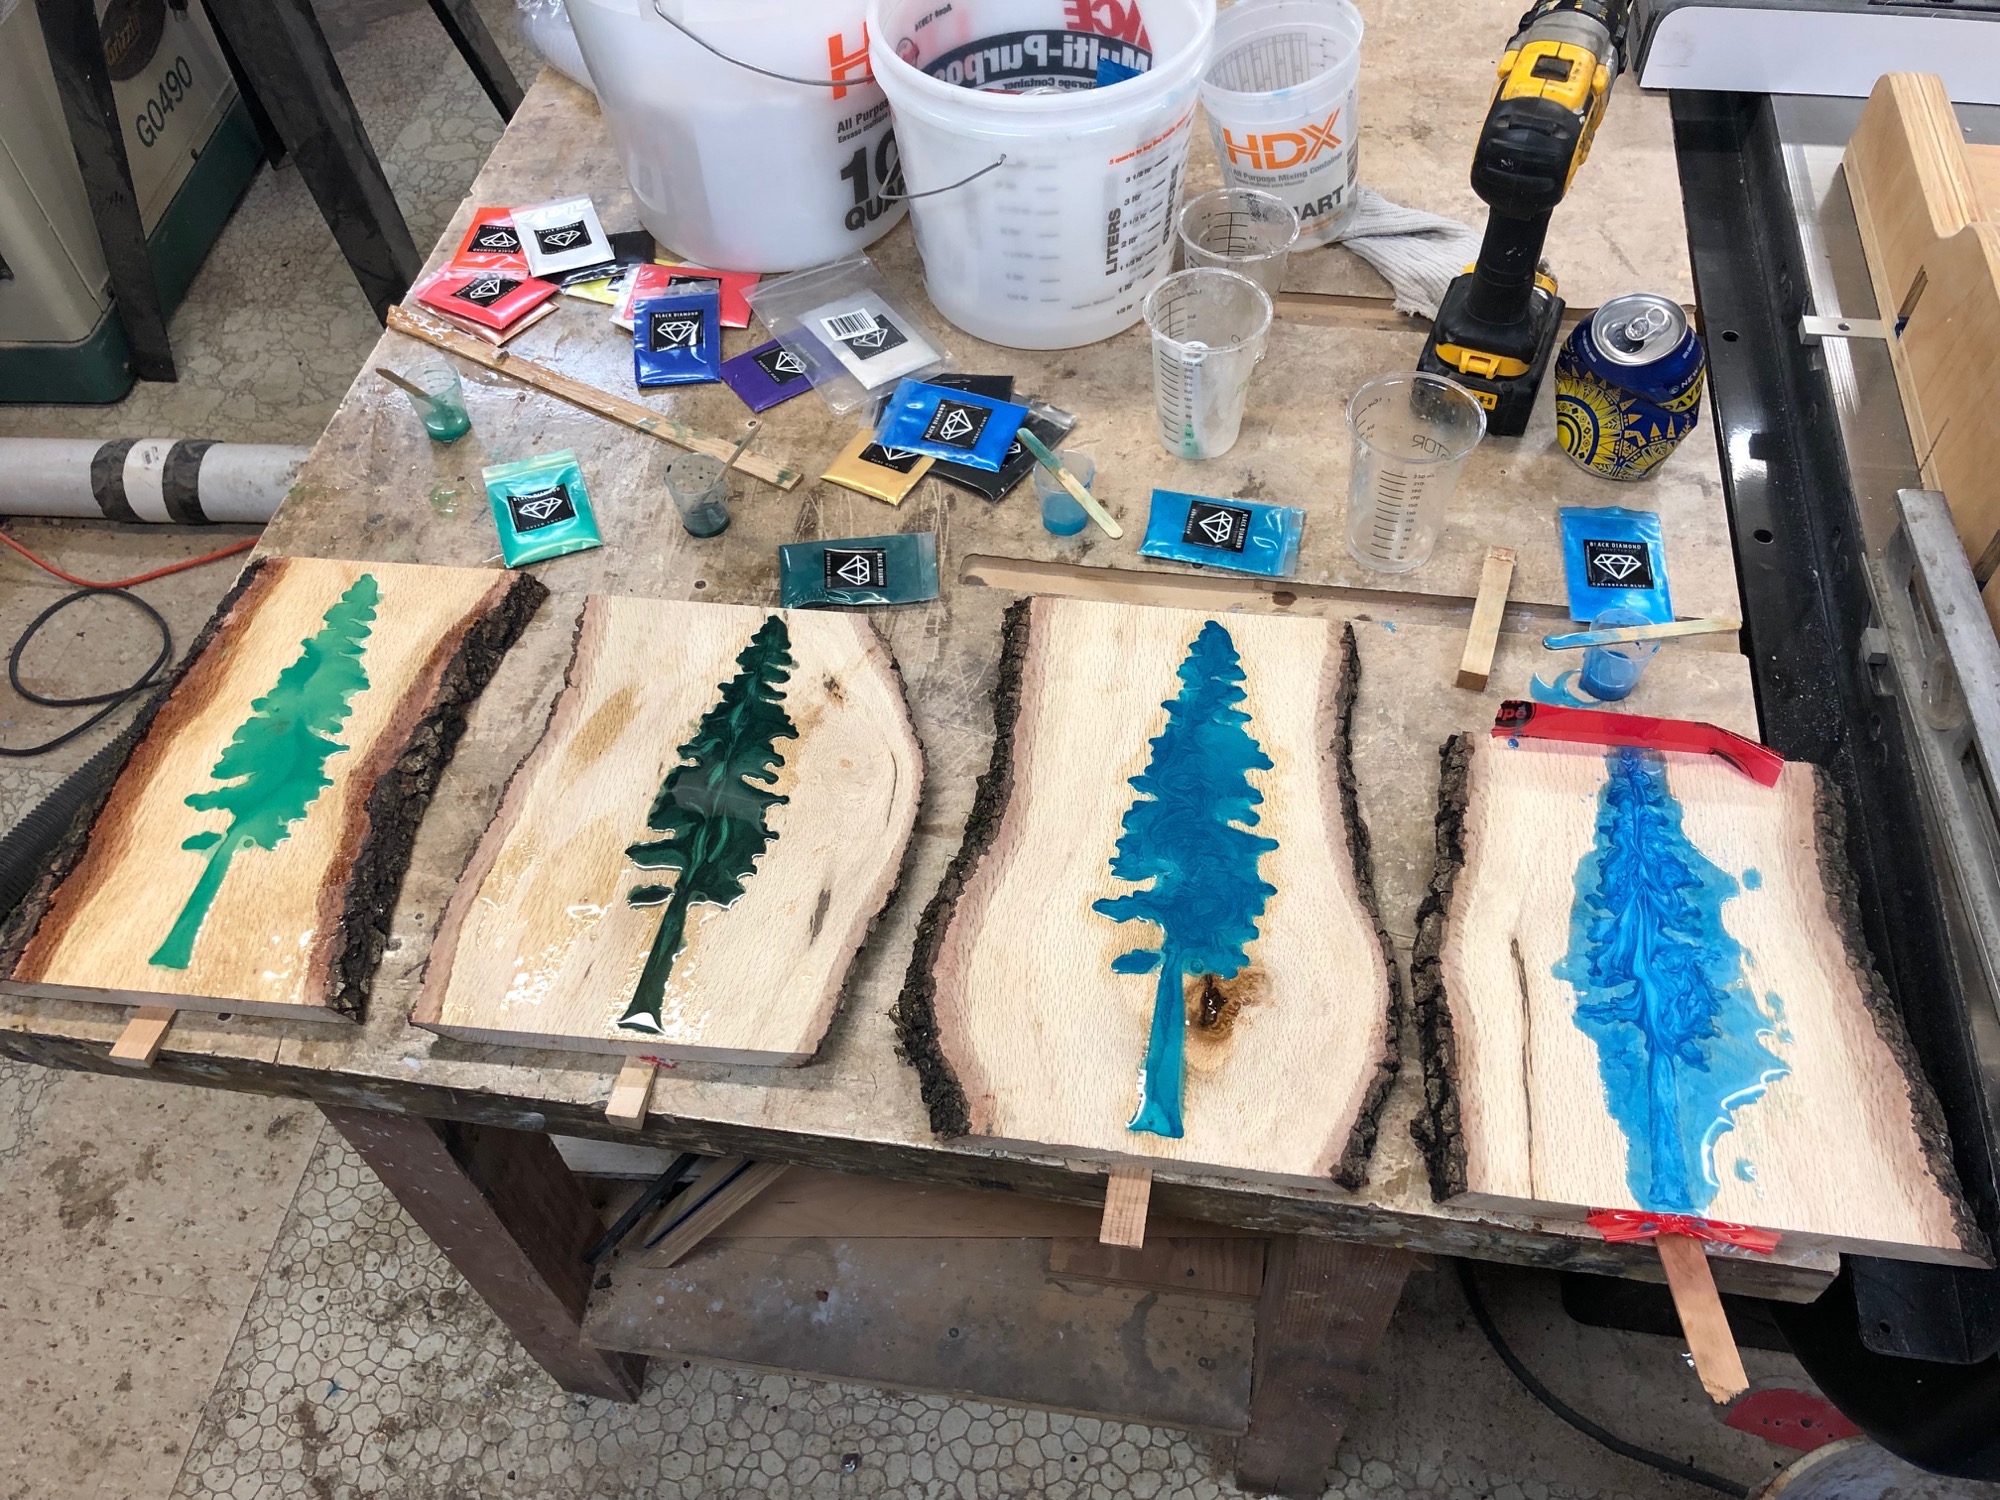 epoxy resin art trees in wood